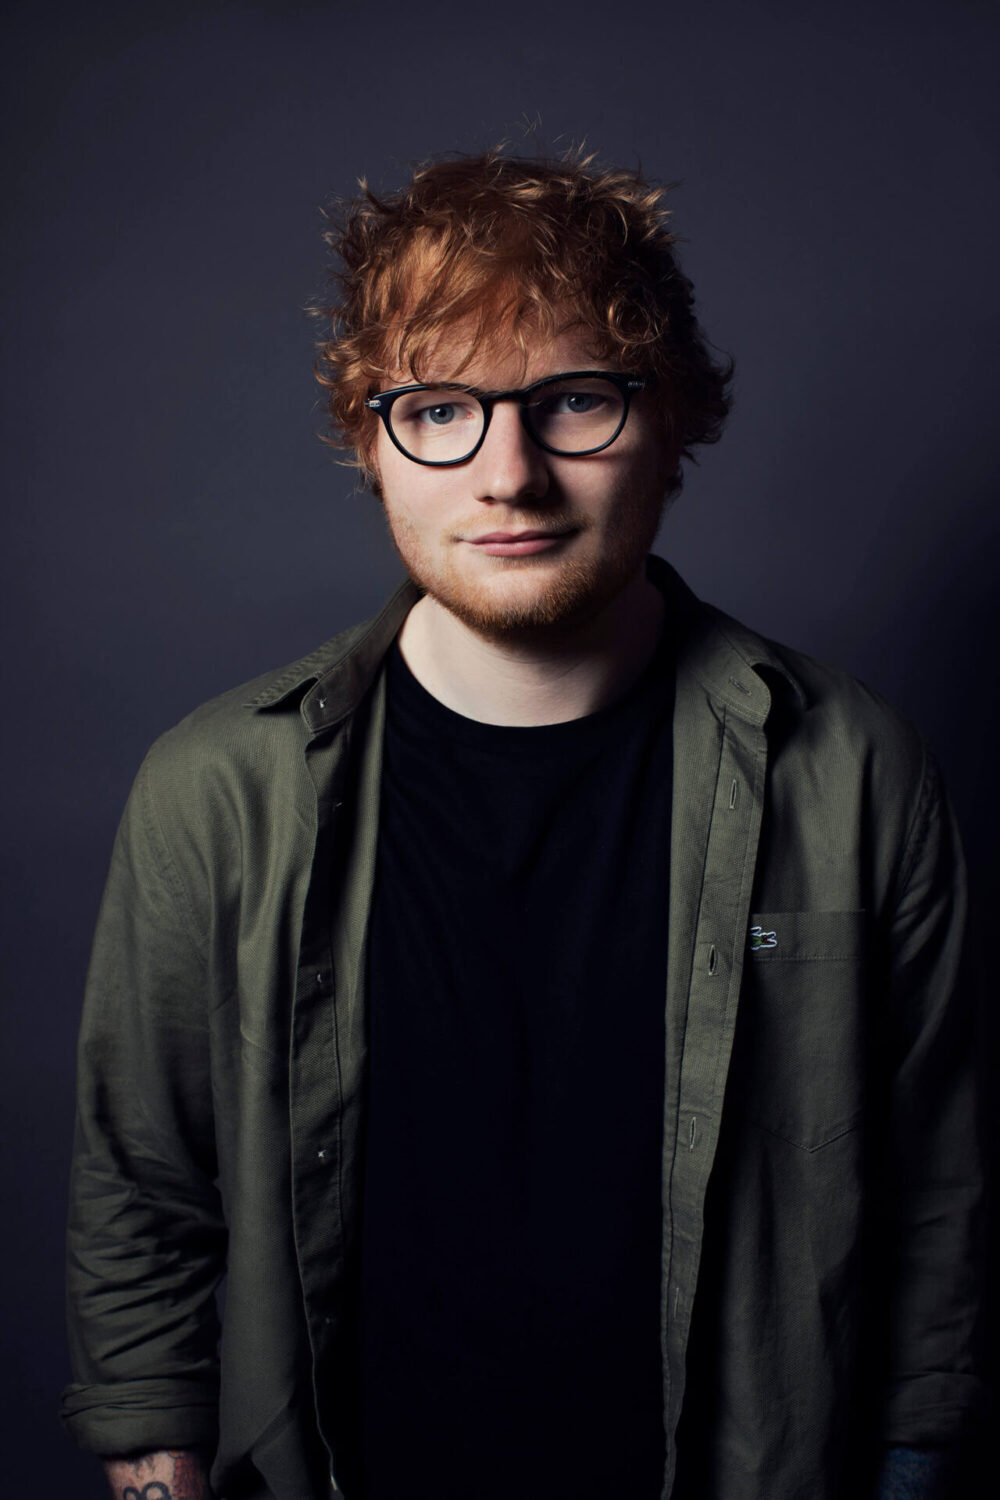 Ed Sheeran tieu de 2 e1609745910591 - Ed Sheeran cùng sự hoàn hảo trong từng thanh âm